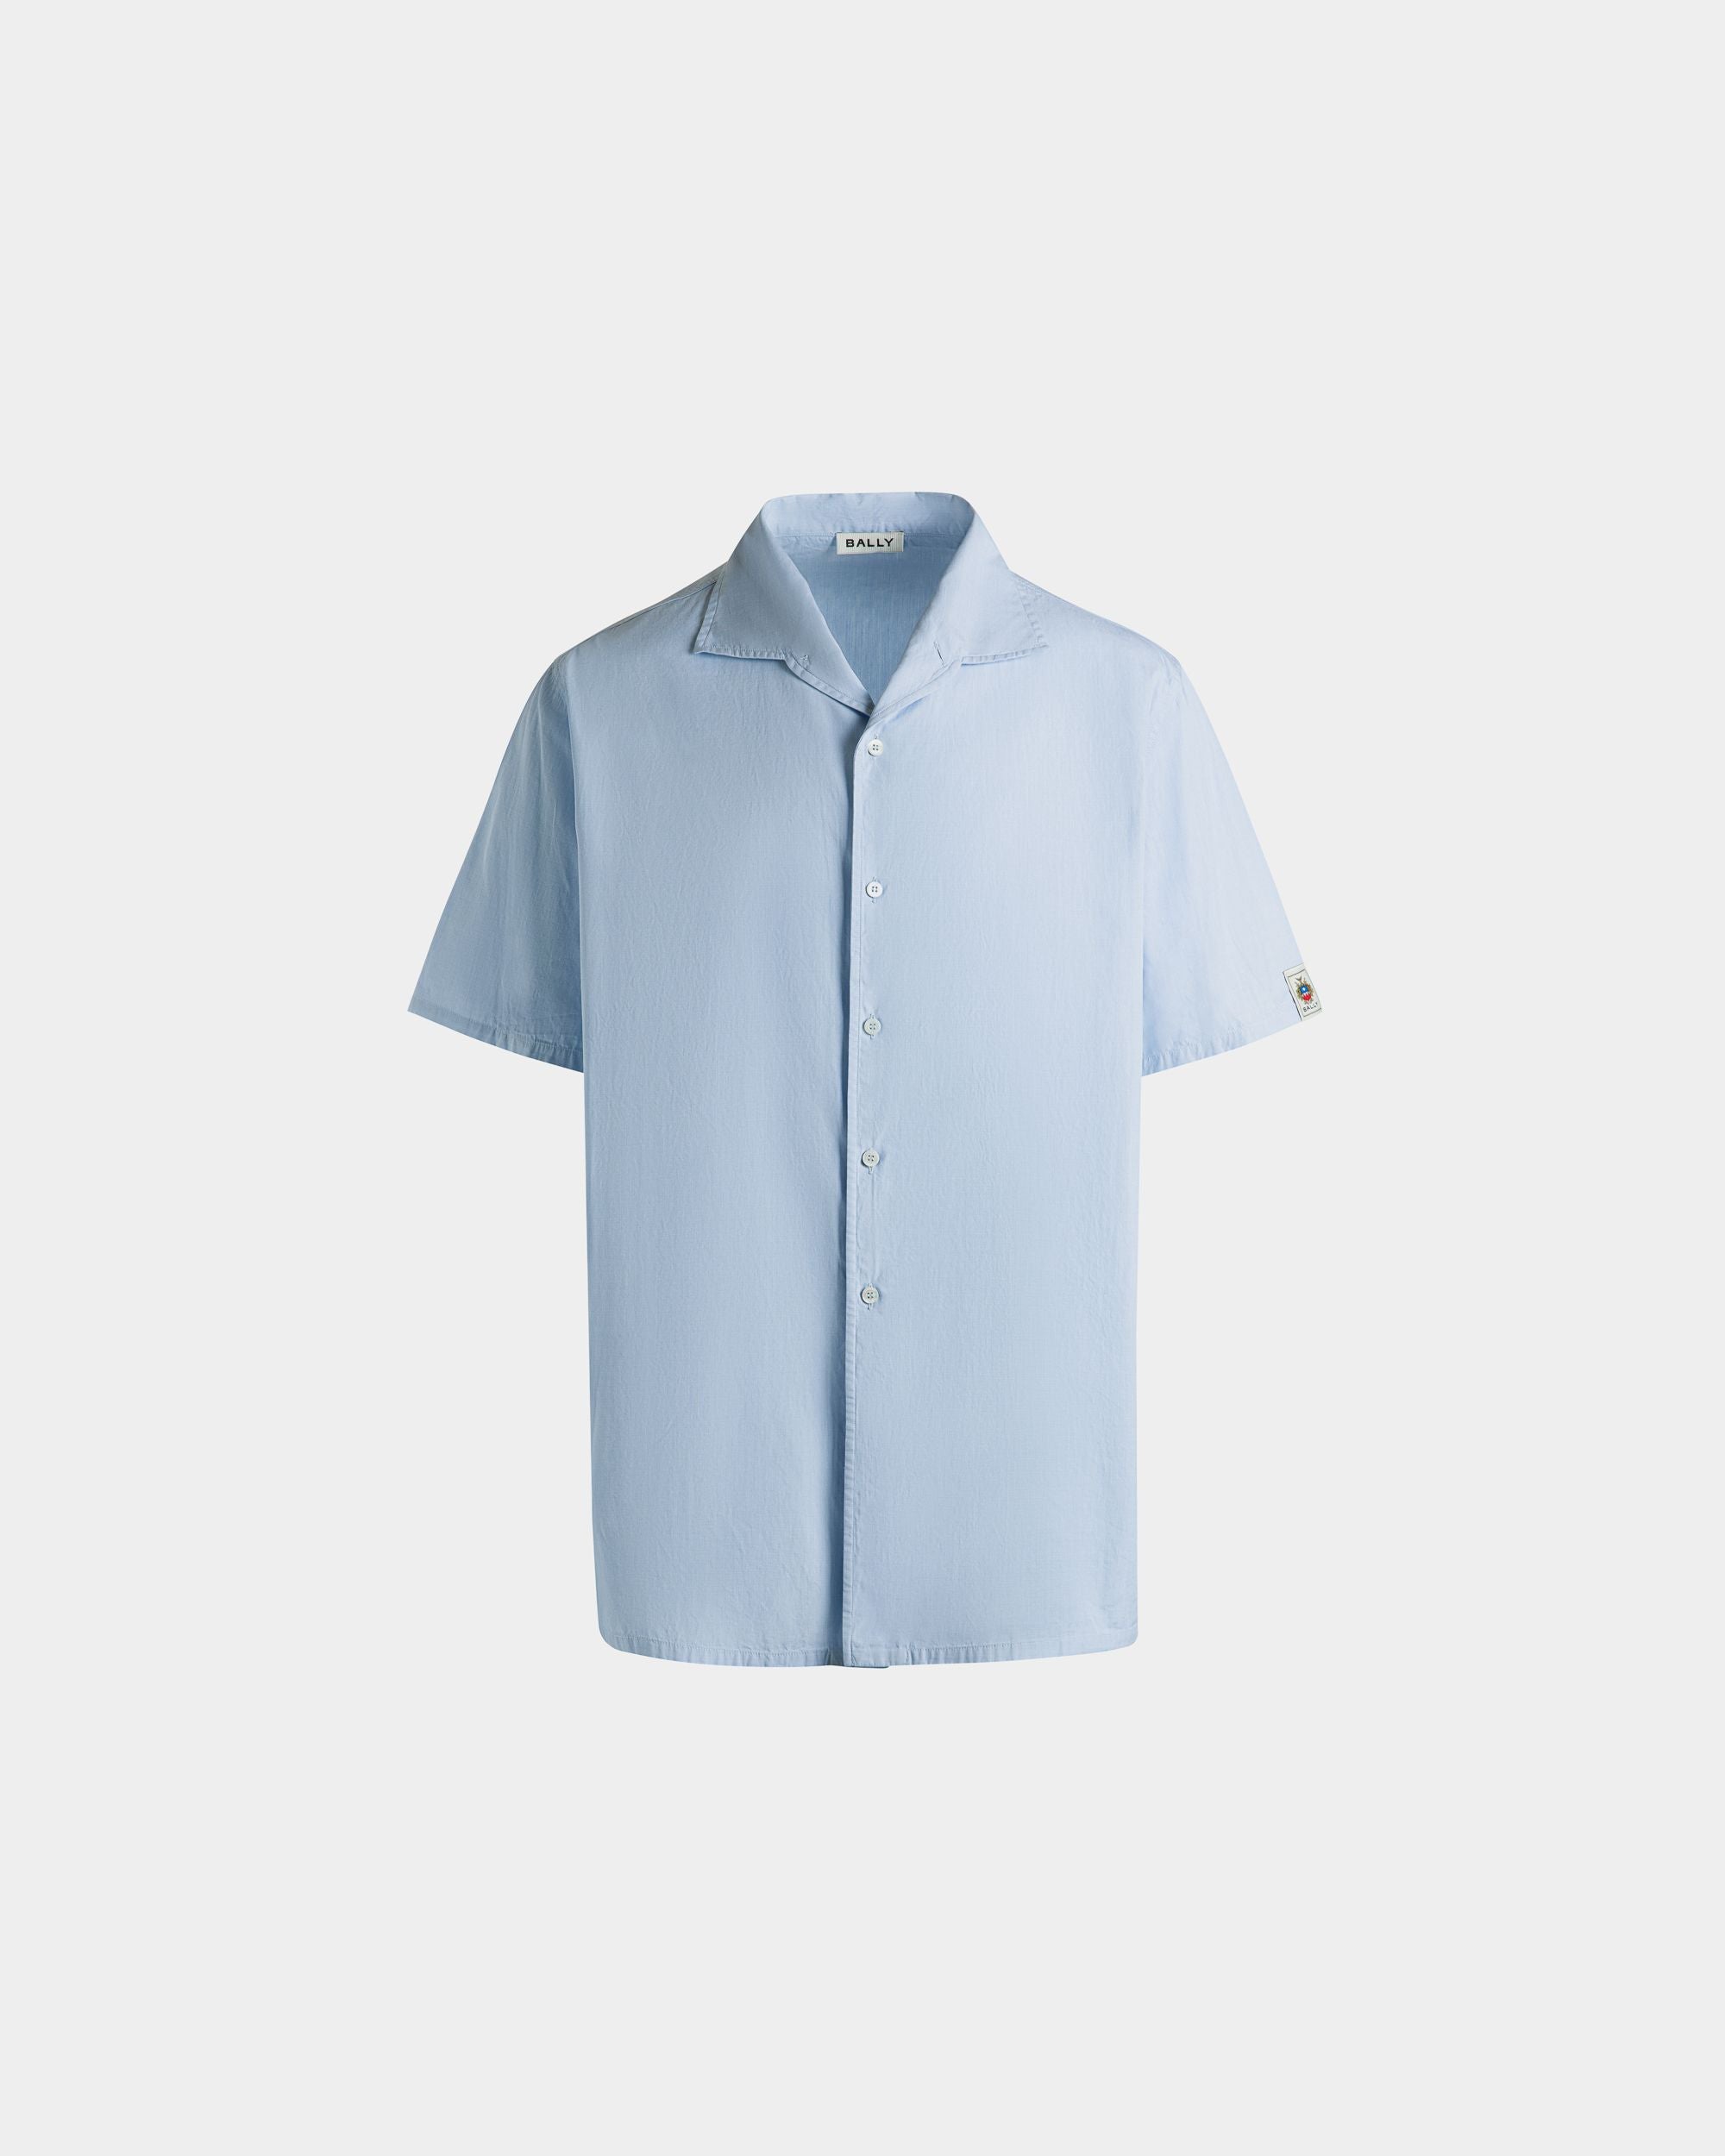 Men's Shirt in Light Blue Cotton | Bally | Still Life Front